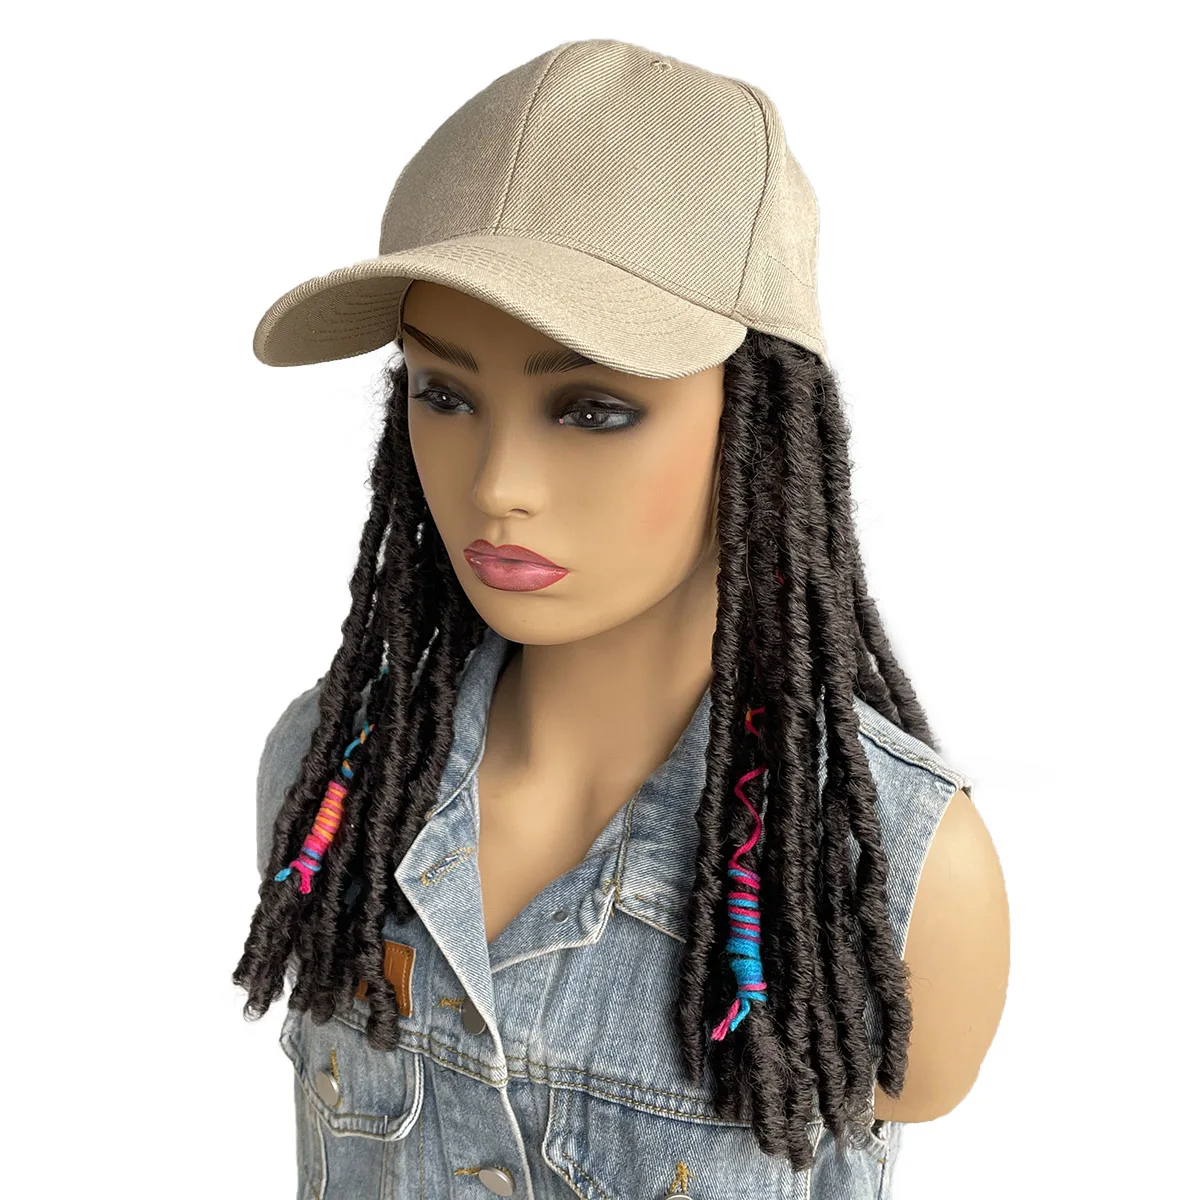 BCHR Hat Dreadlocks Wigs for African Black Women Daily Synthetic Braided Hair Baseball Cap Dread Locks Wig